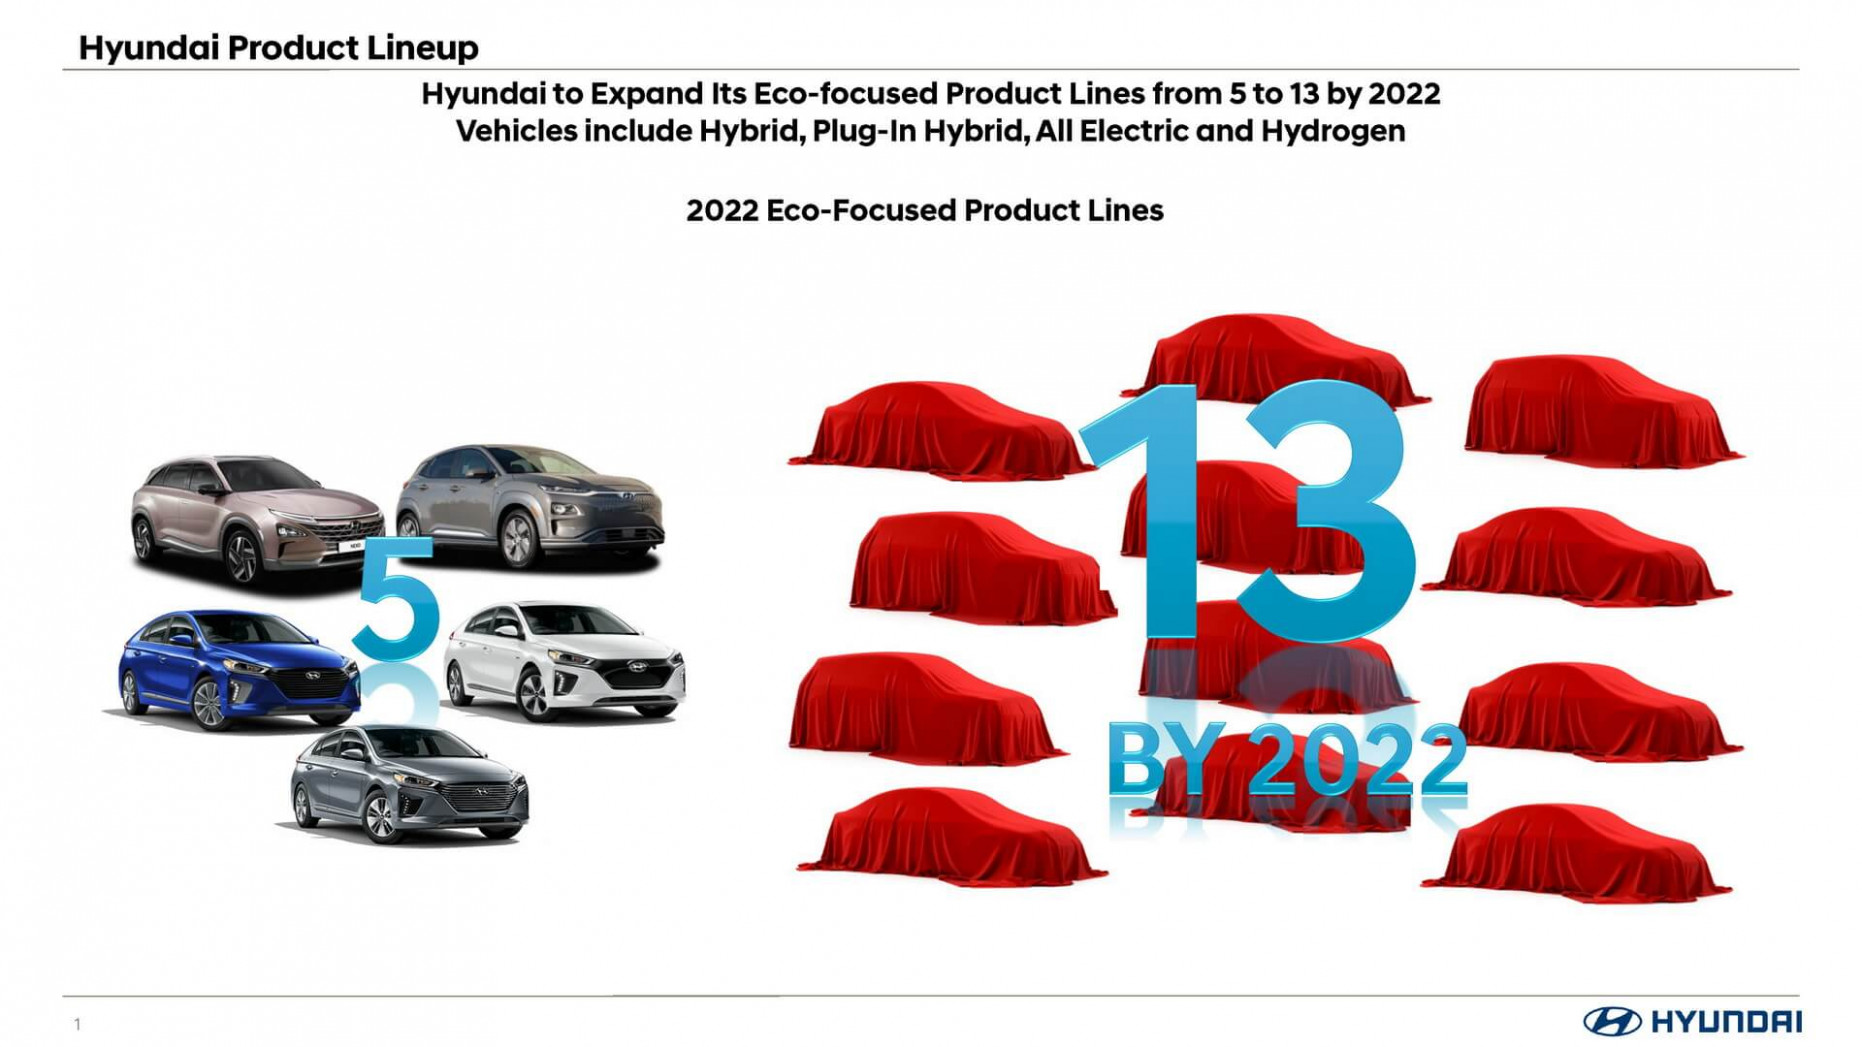 Redesign and Concept Hyundai Electric Car 2022